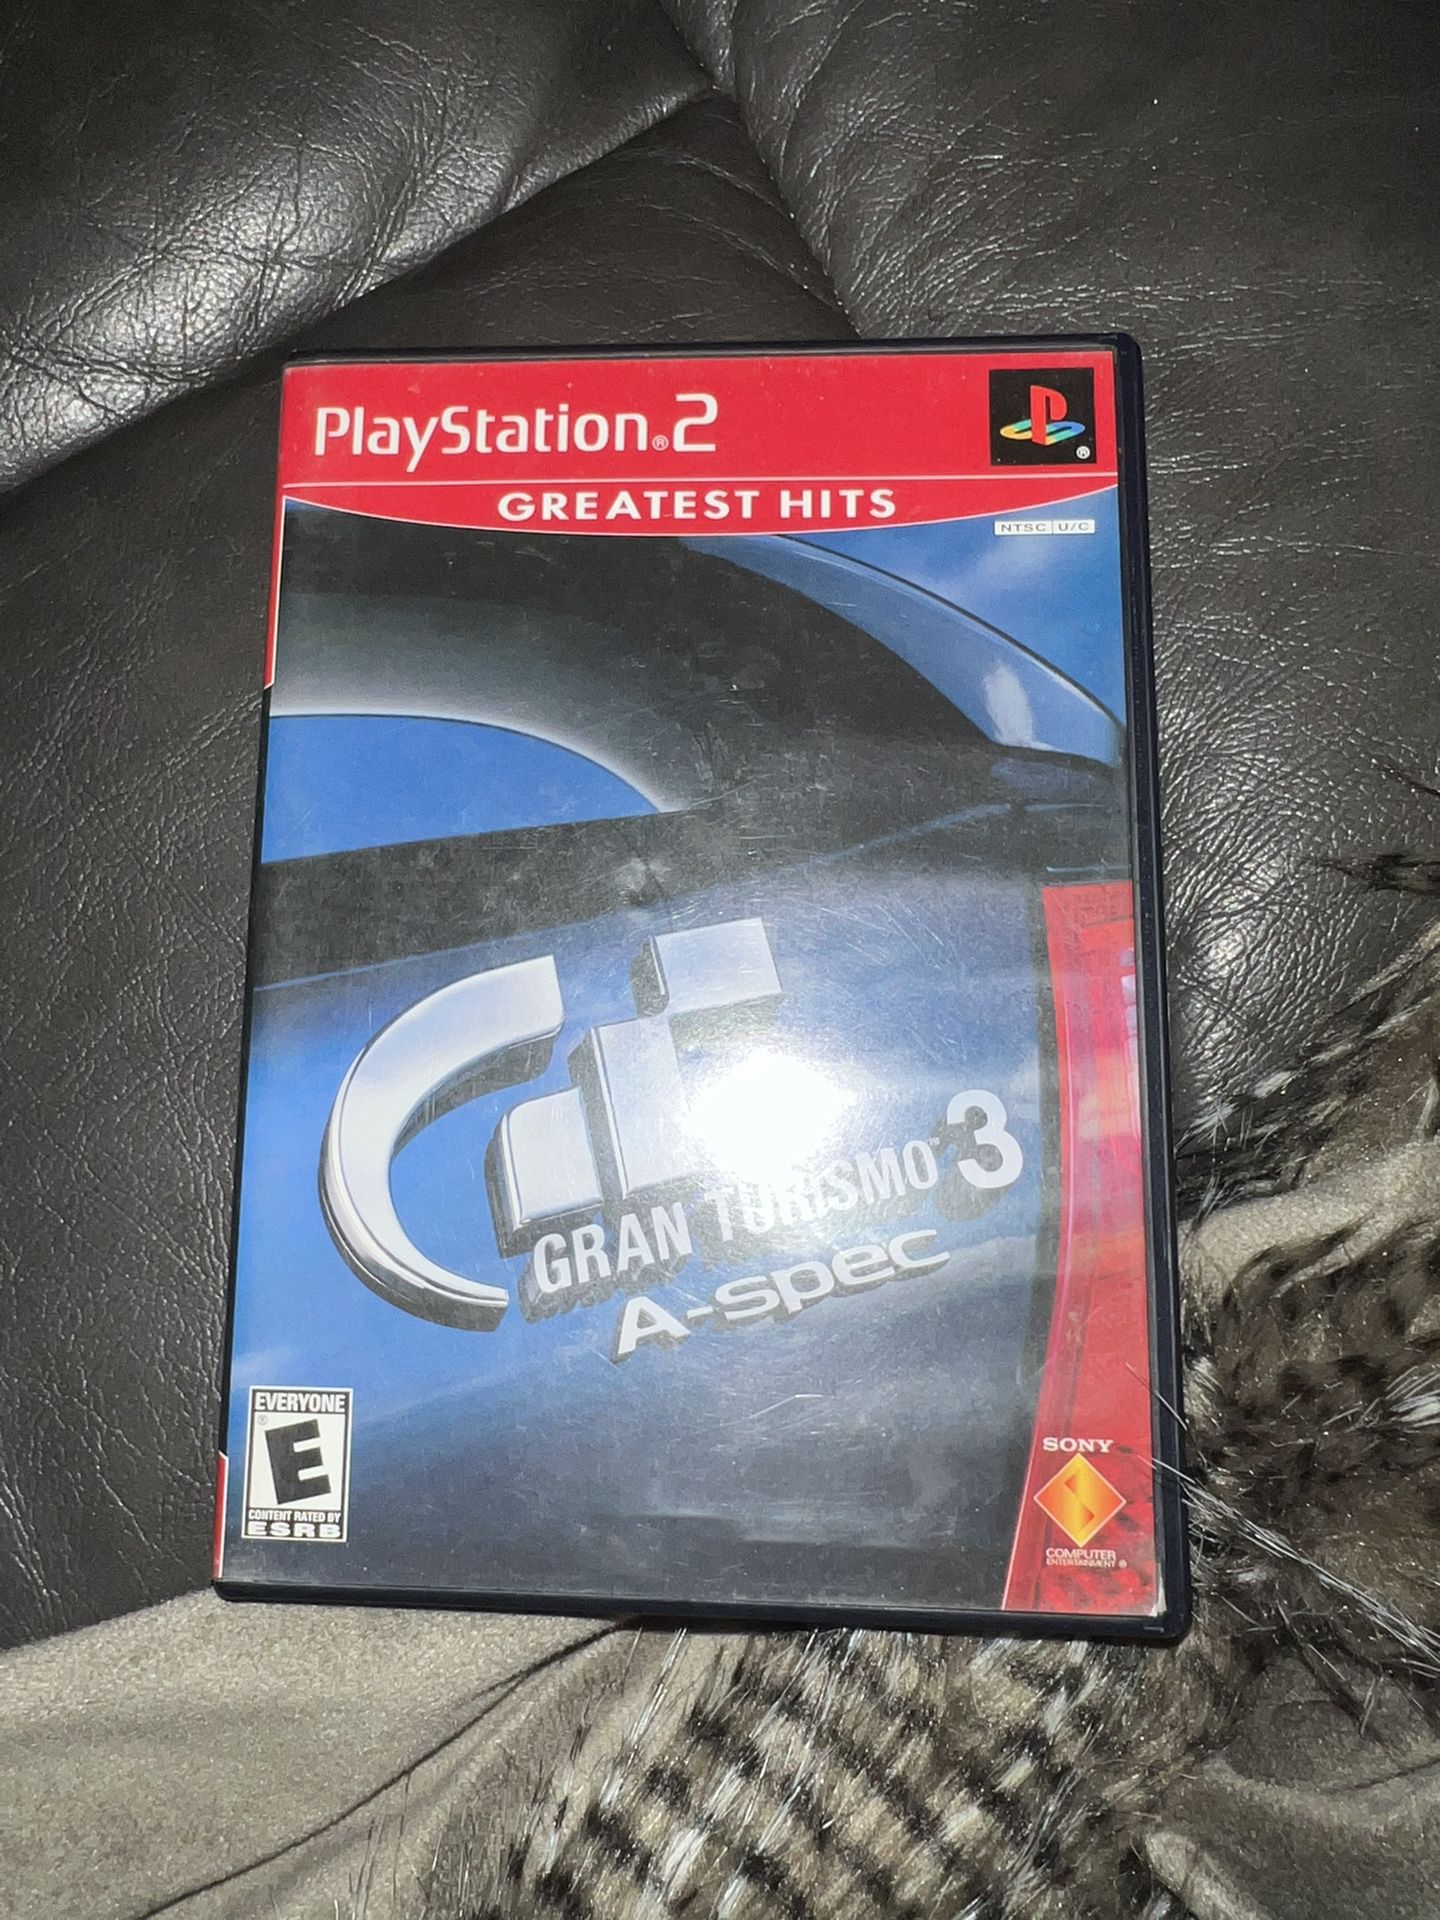 Gran Turismo 3 A-Spec - PlayStation 2, PS2 - Black Label - Complete CIB - Tested